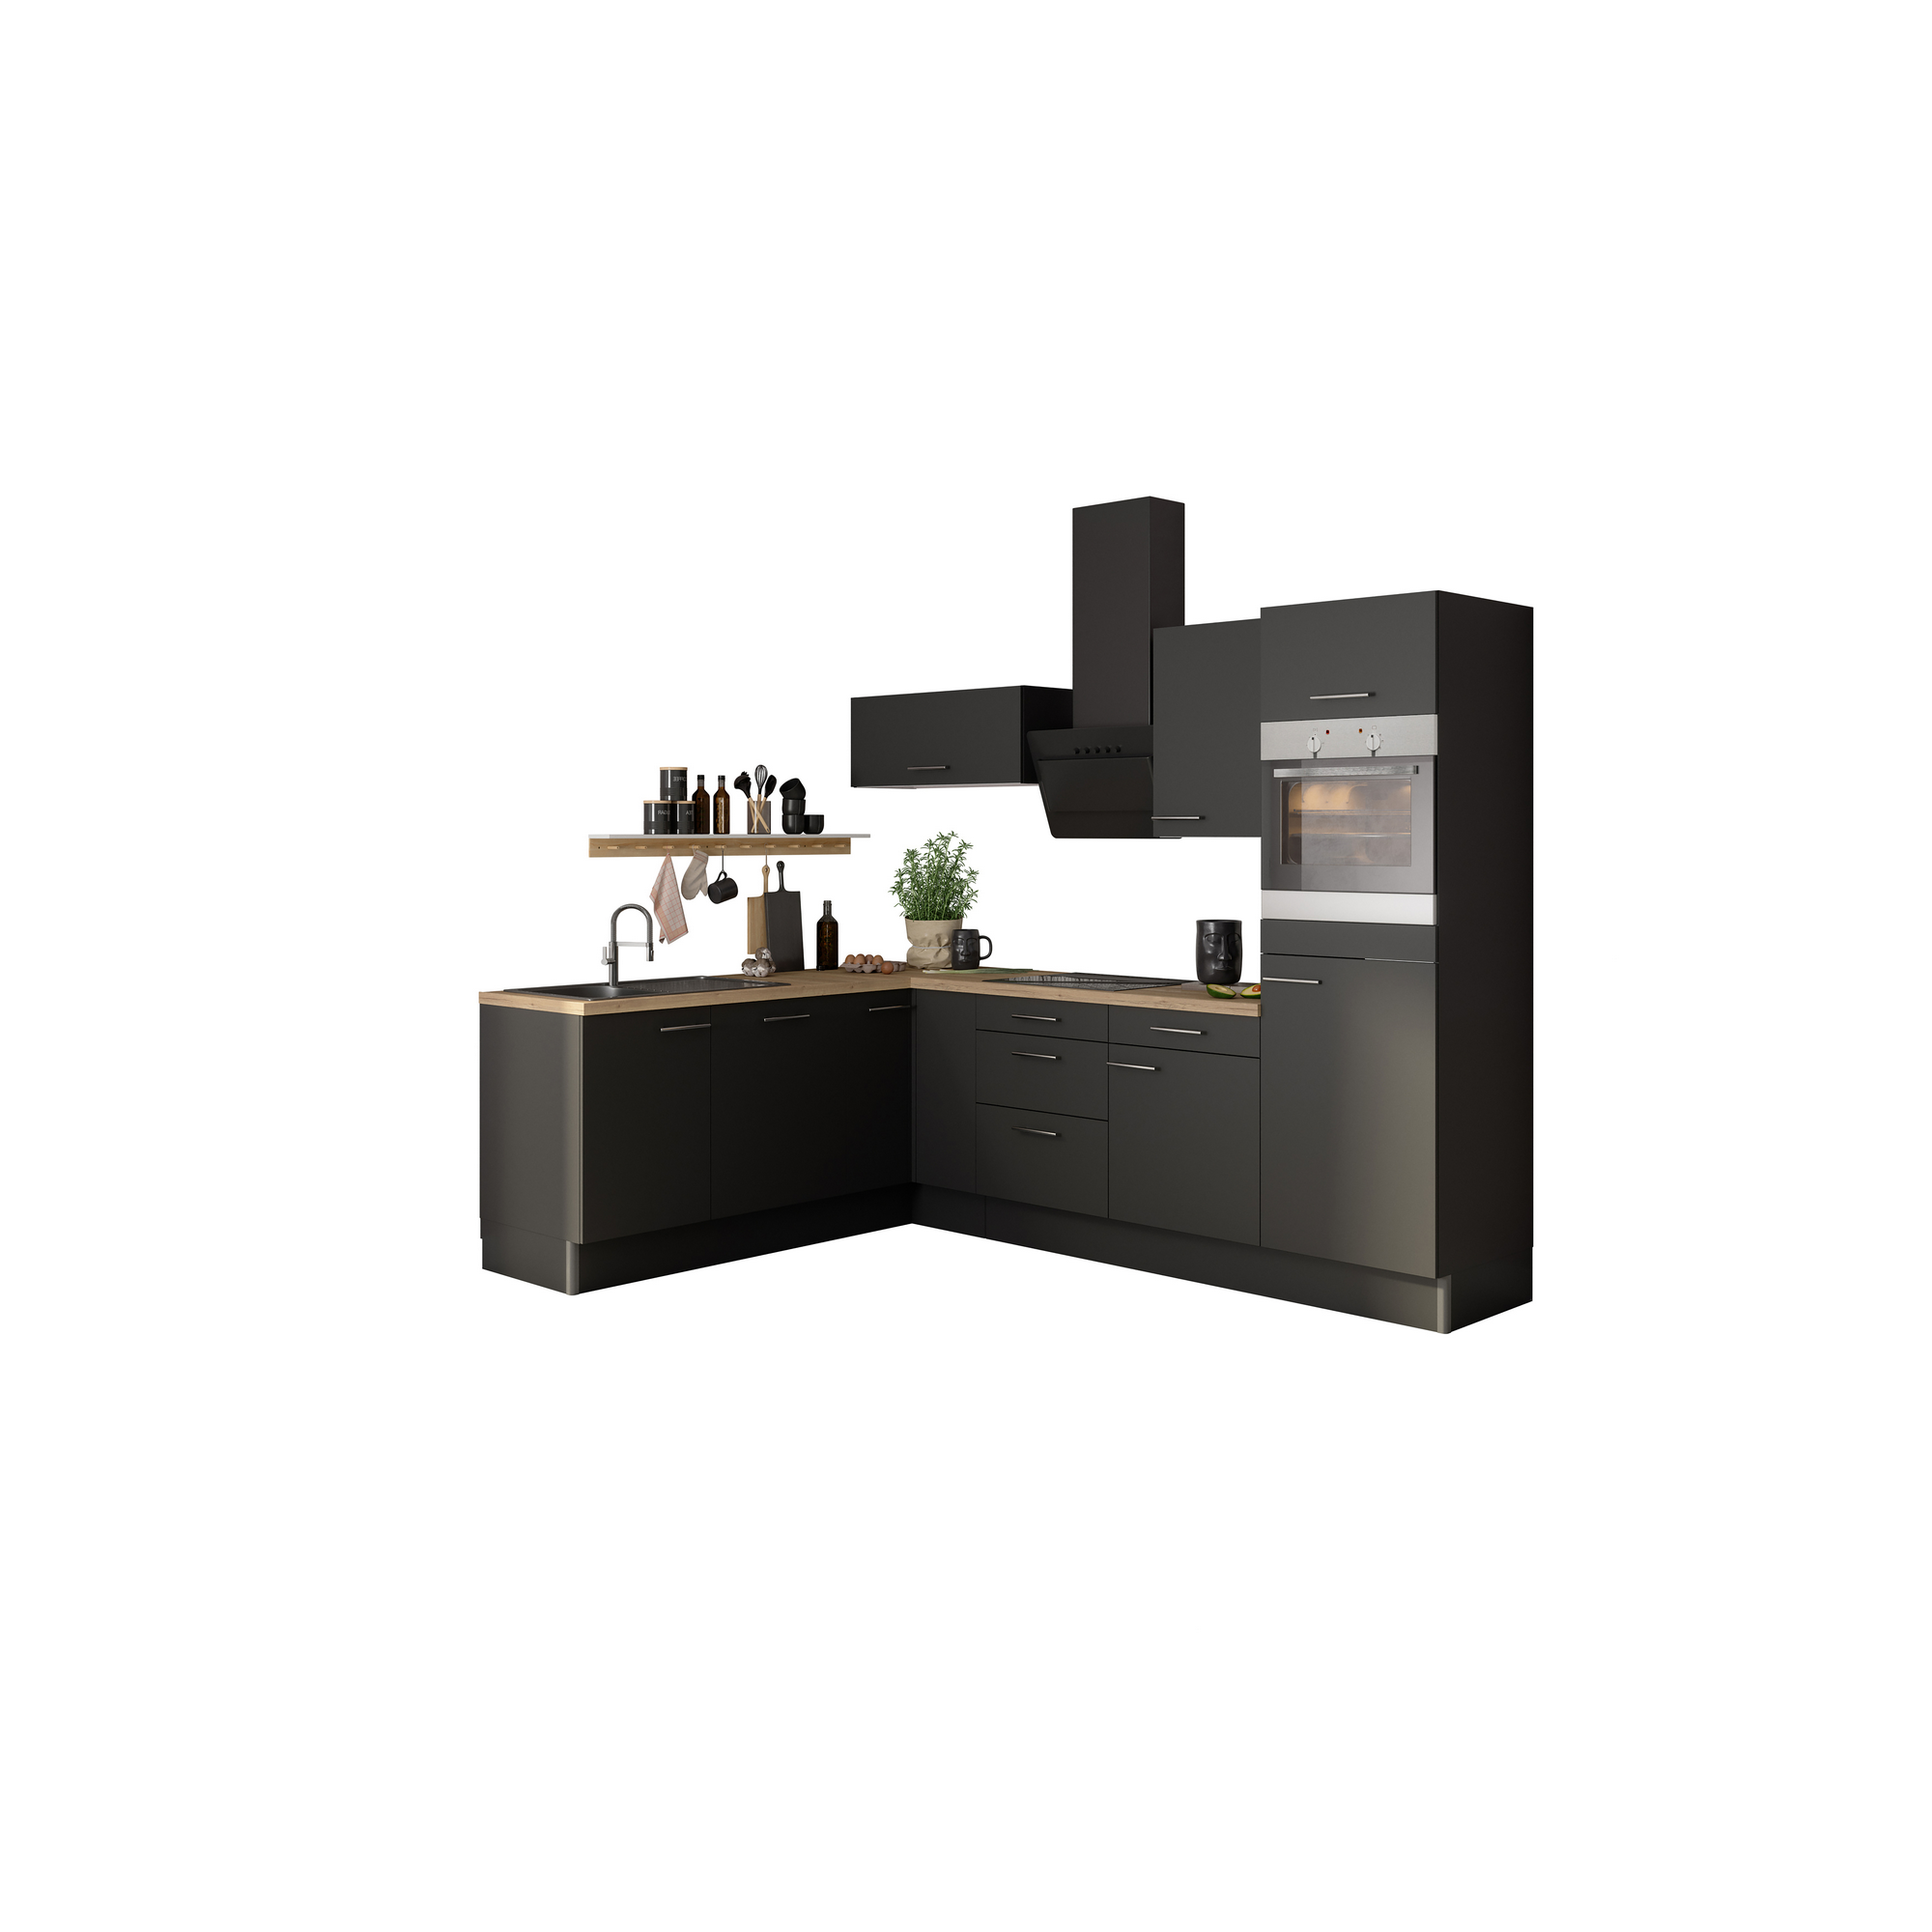 Winkelküche mit E-Geräten 'OPTIkoncept Ingvar420' anthrazit matt 270 cm + product picture